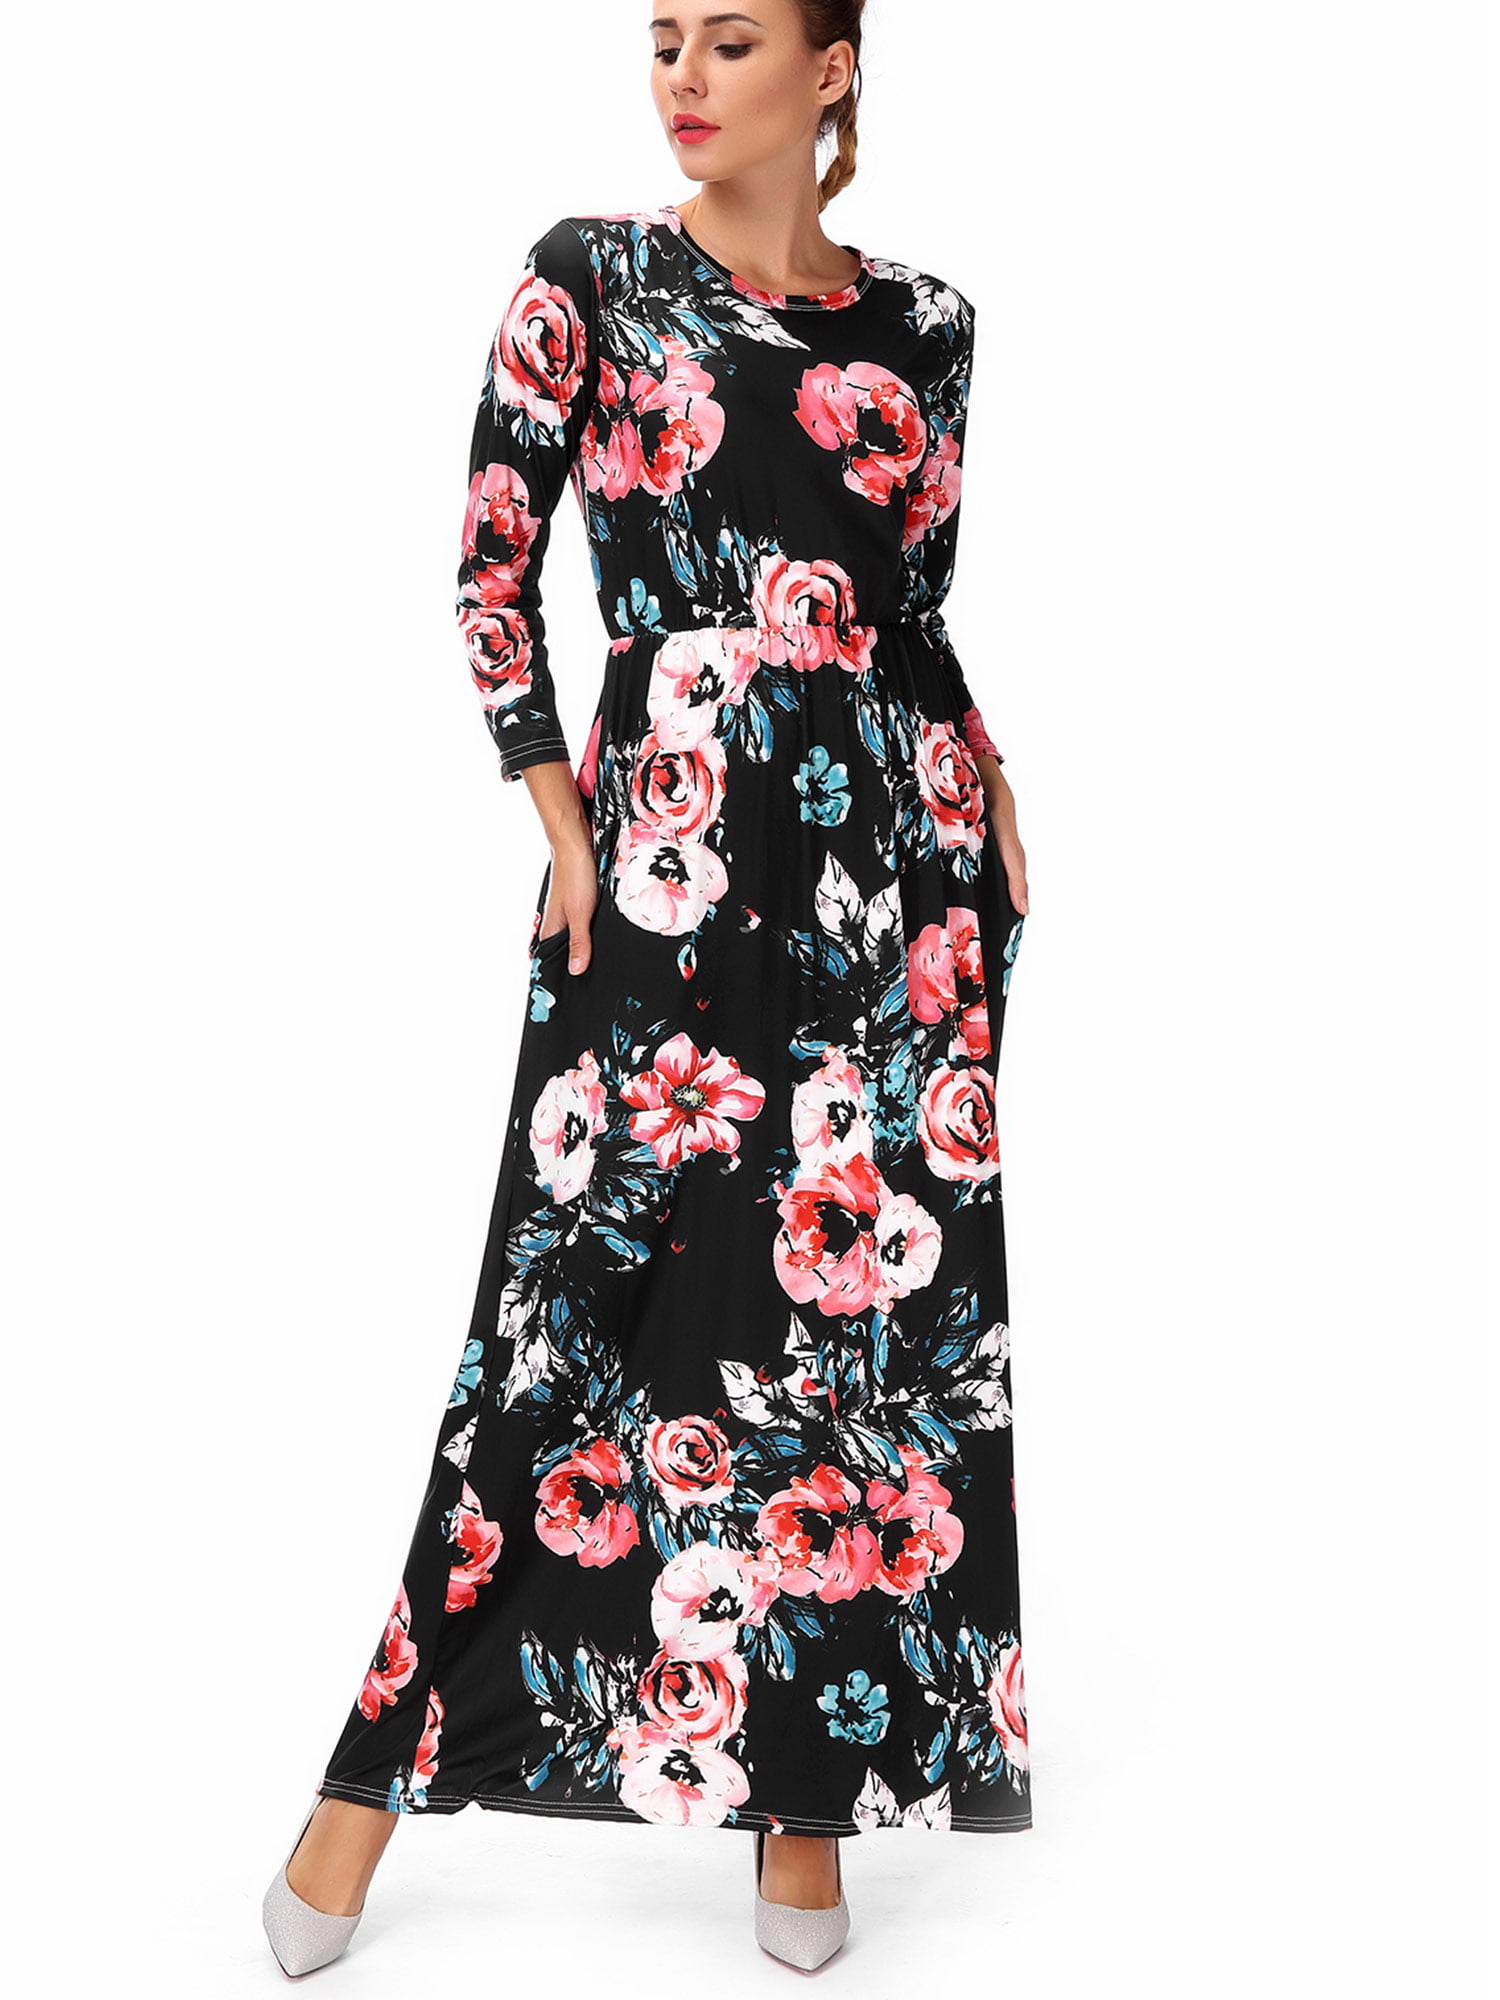 black long sleeve dress with flowers